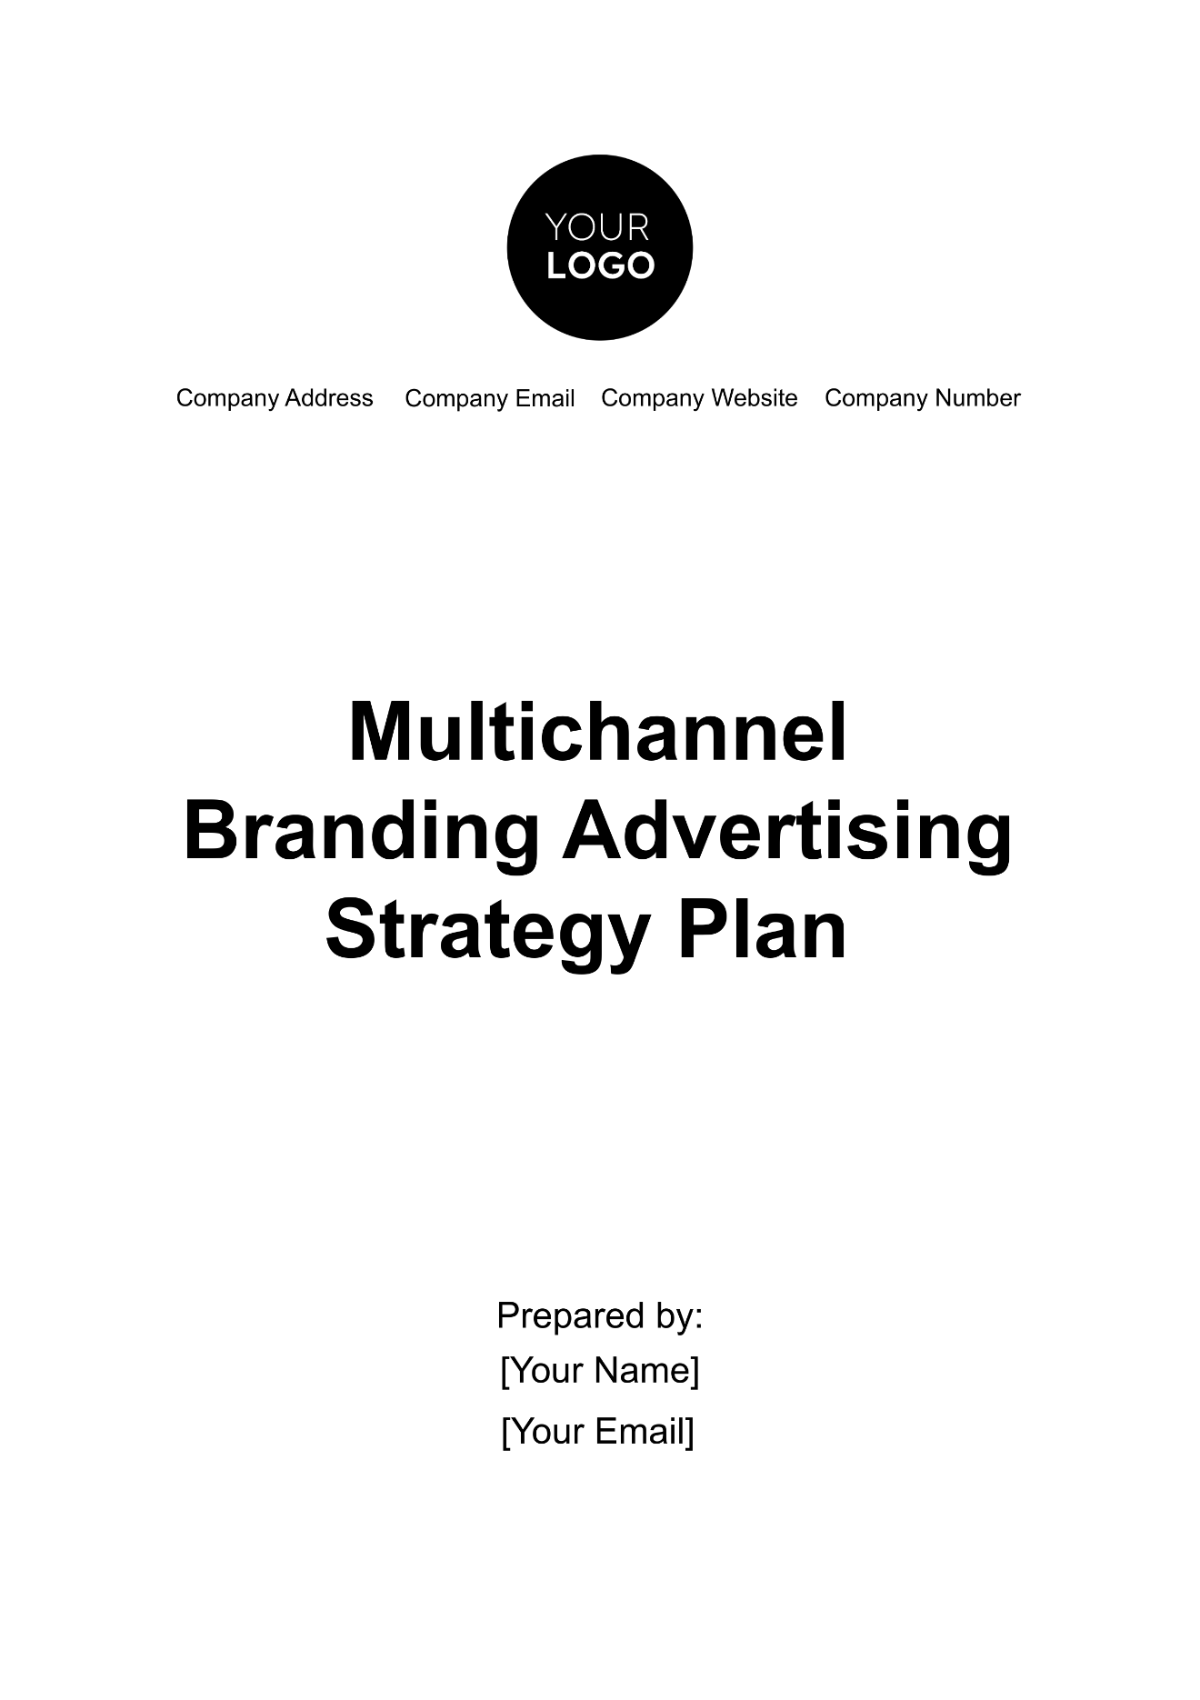 Free Multichannel Branding Advertising Strategy Plan Template